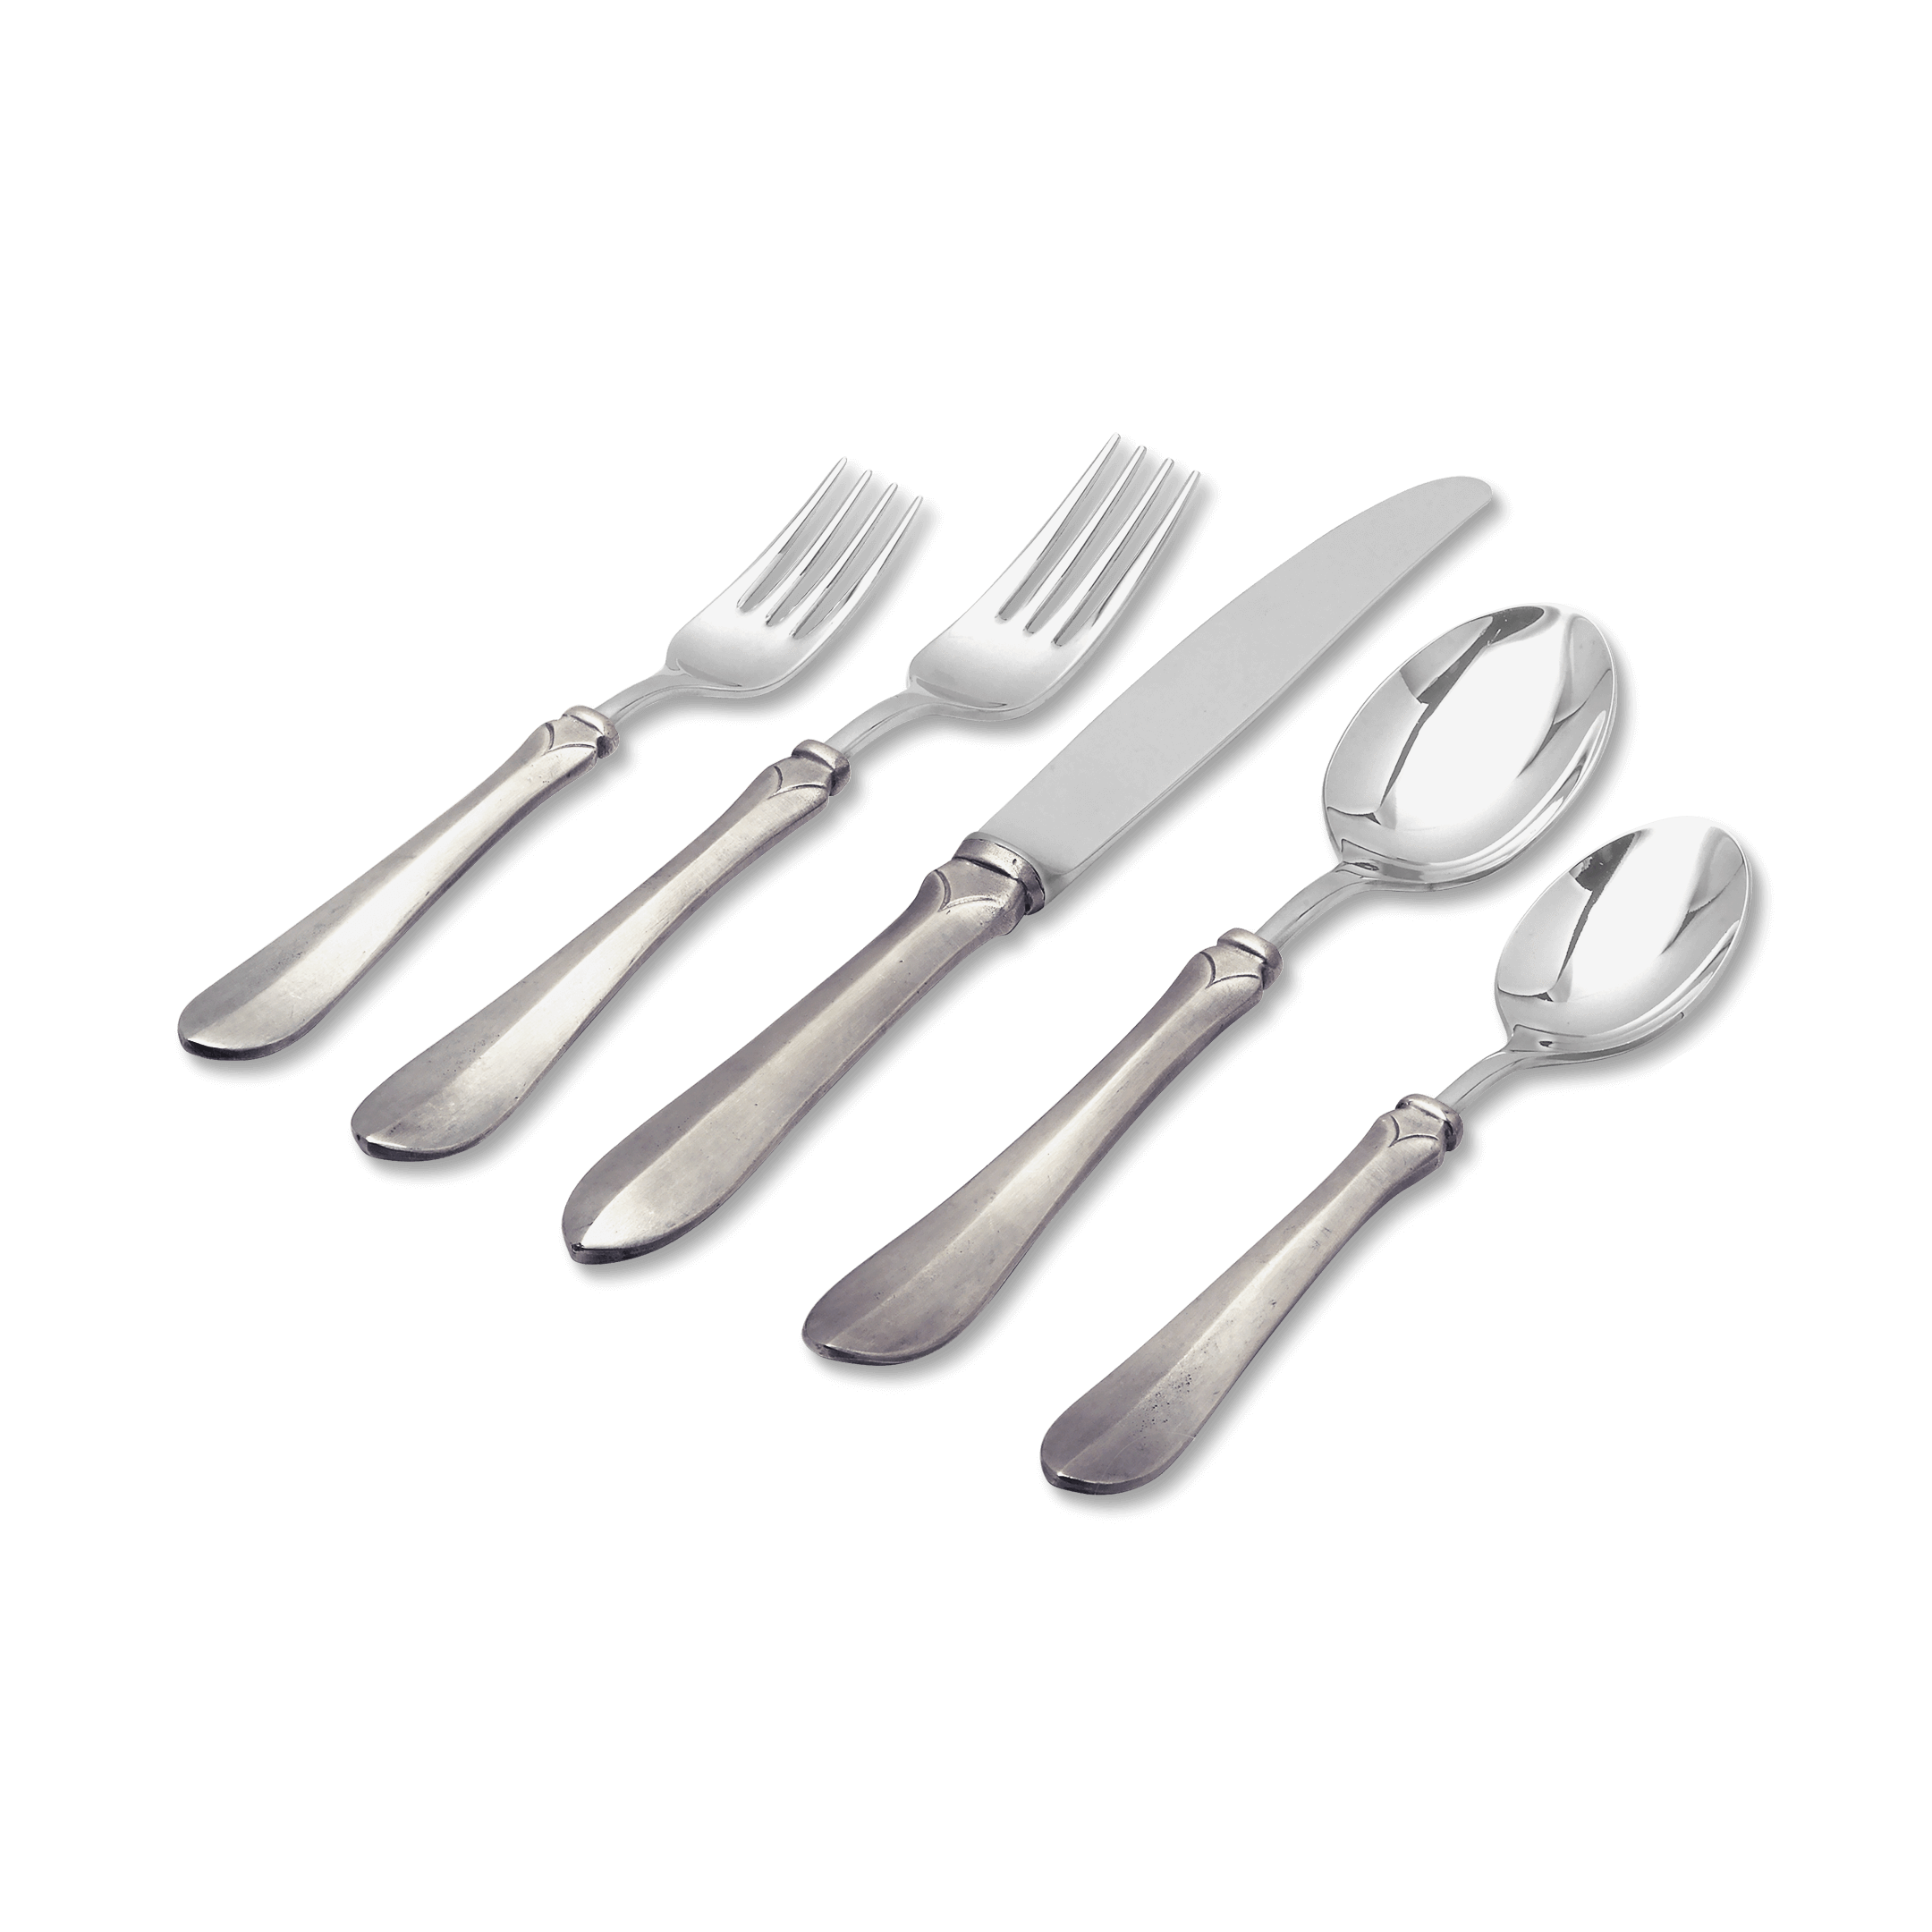 Silverware Set, 5 Piece Flatware Set, Stainless Steel Eating Utensils Cutlery Set, Includes Dinner Knives/Forks/Spoons/Teaspoons/Salad Forks